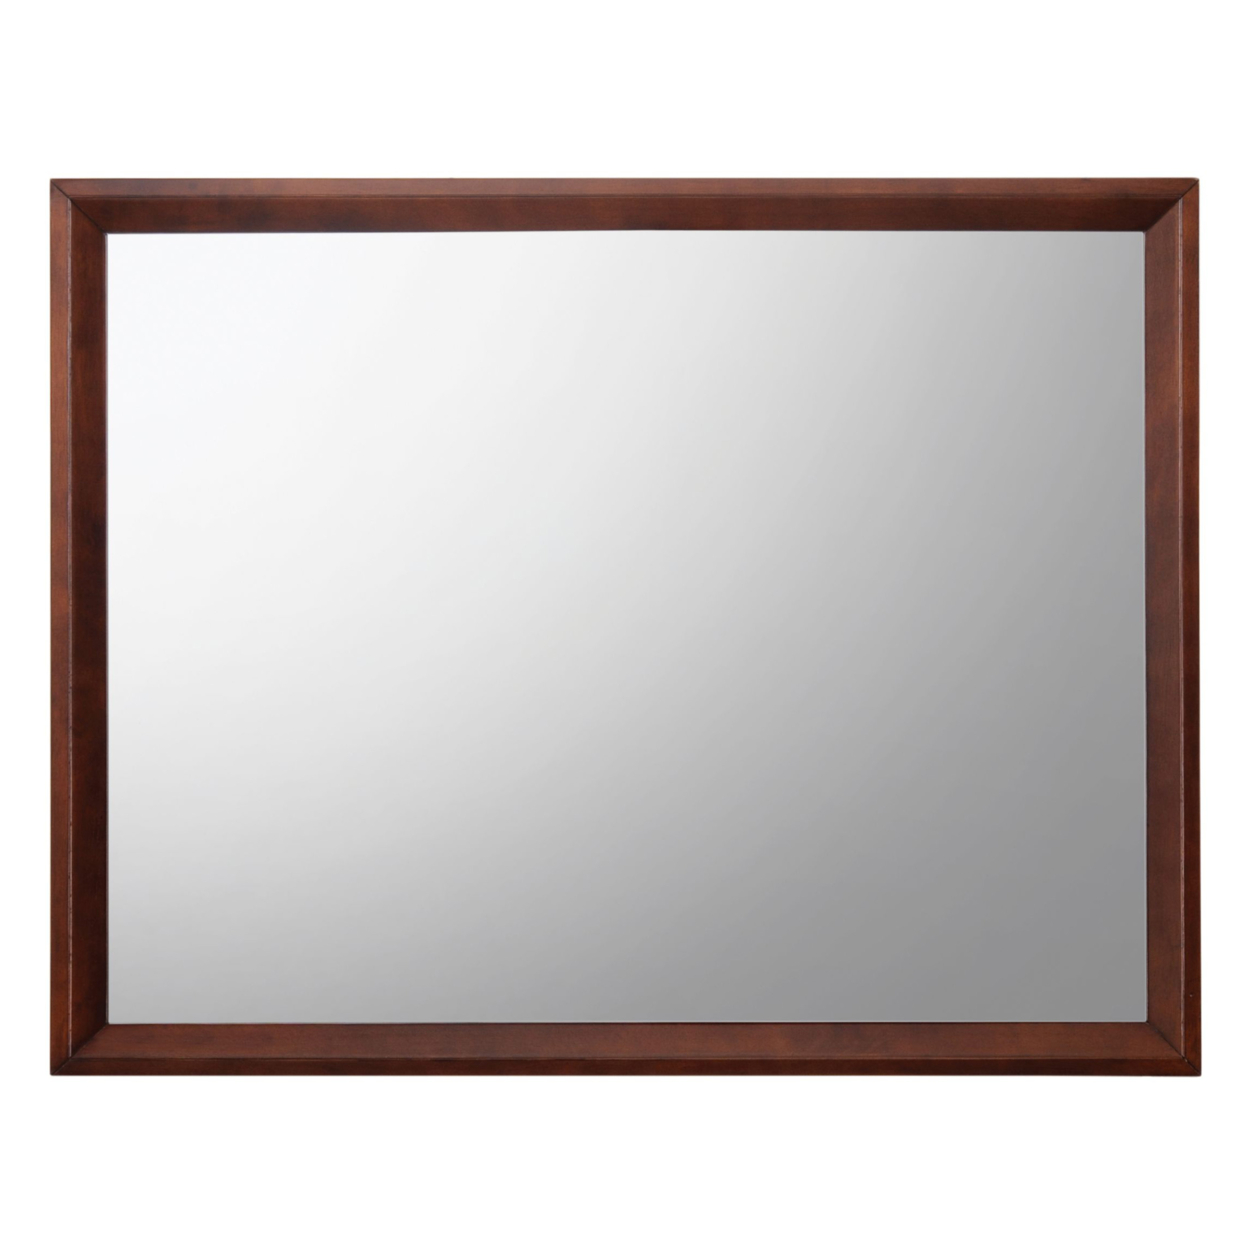 Rectangular Shape Wooden Frame With Mirror Encasing, Brown And Silver- Saltoro Sherpi